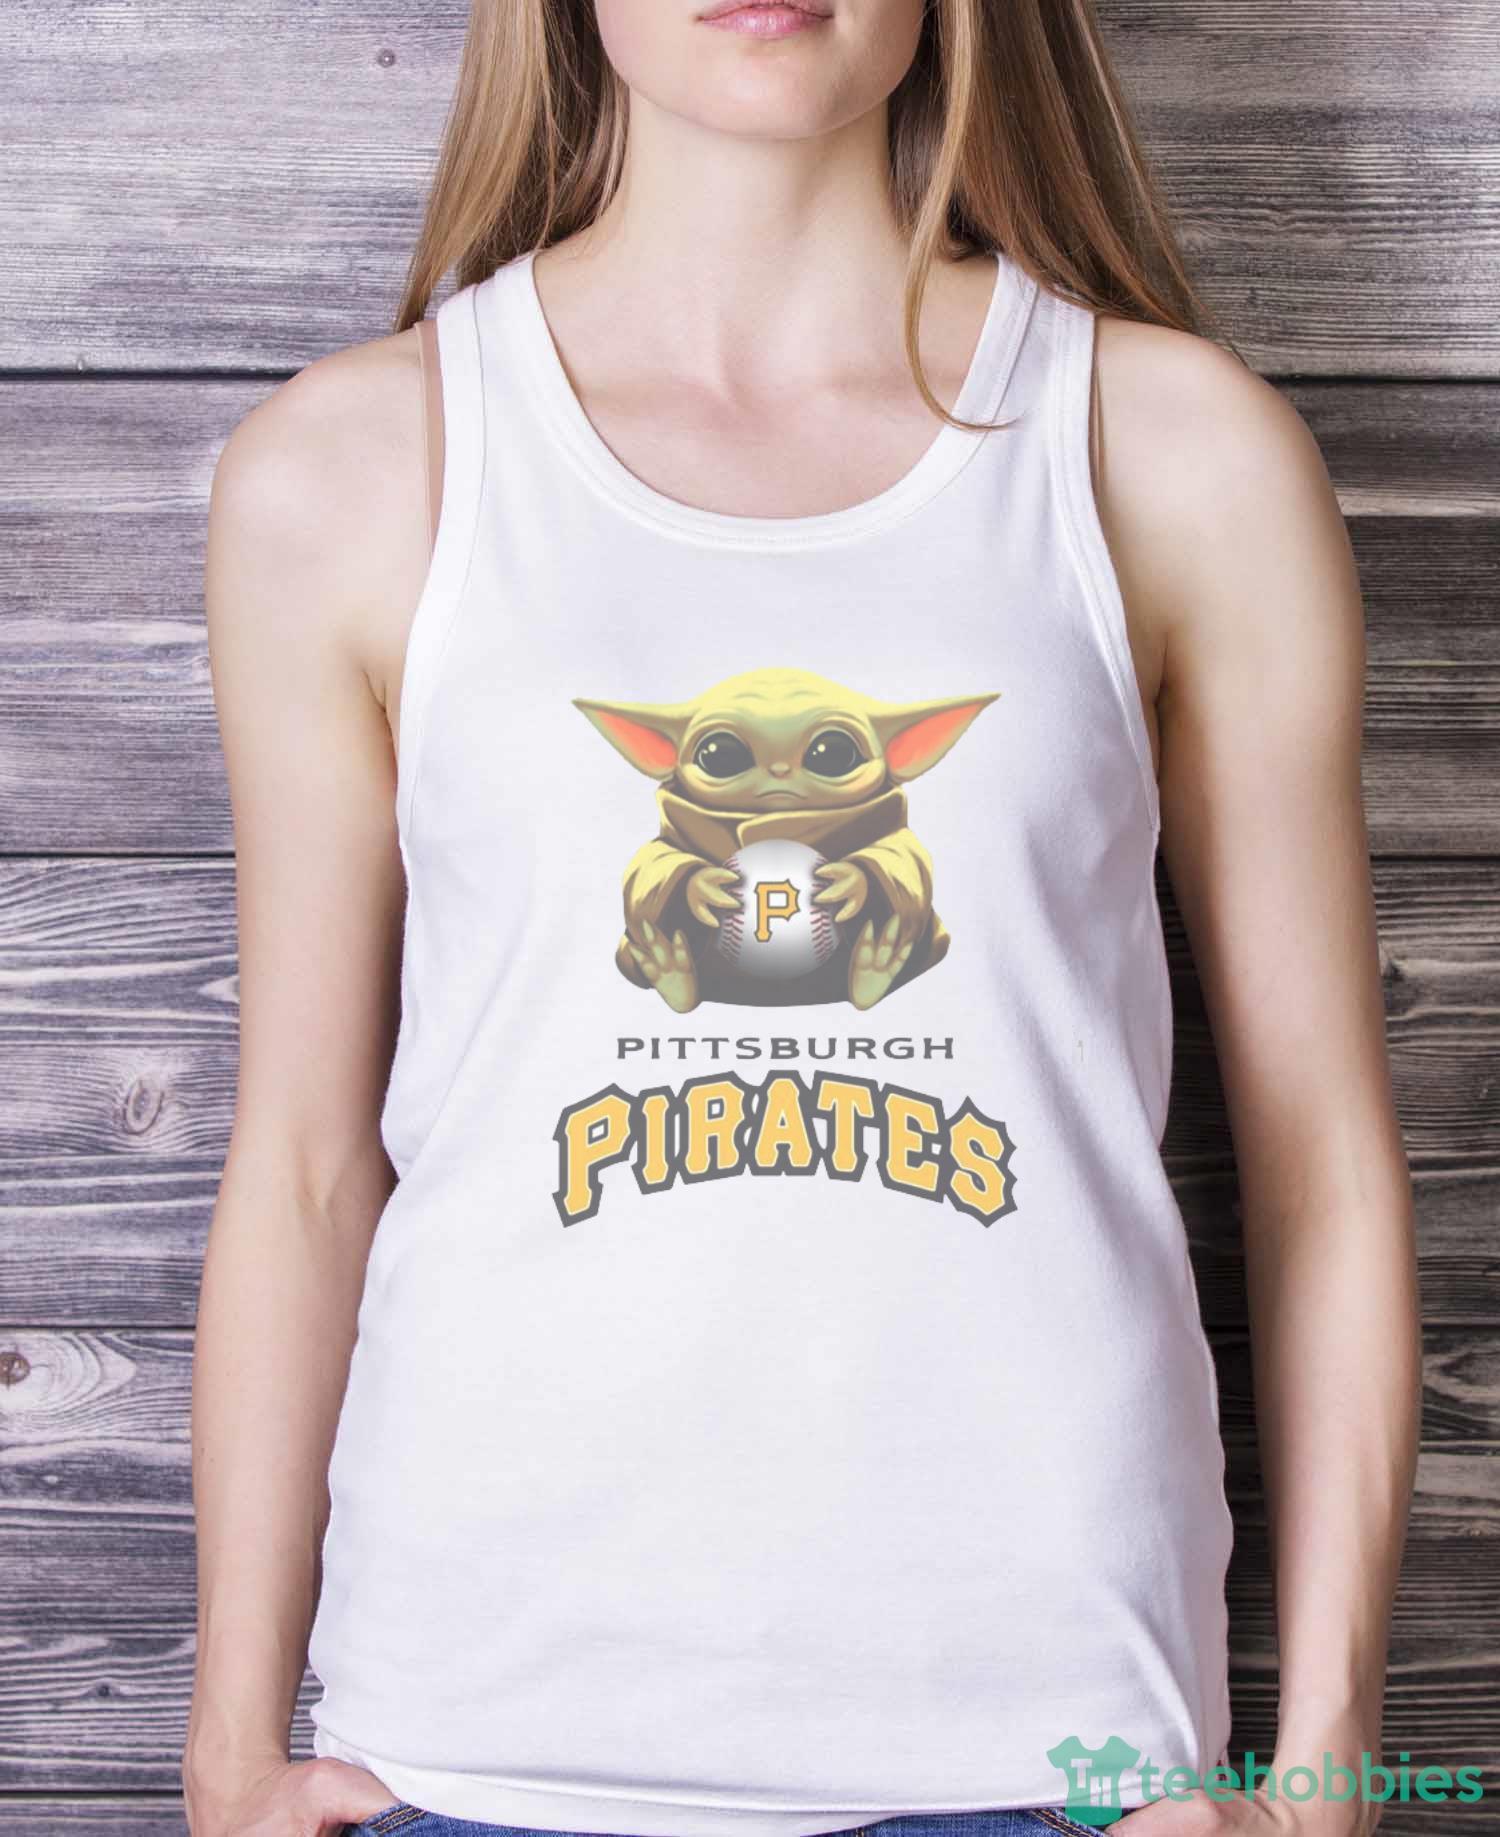 MLB Baseball Pittsburgh Pirates Star Wars Baby Yoda Shirt T Shirt - White Ladies Tank Top